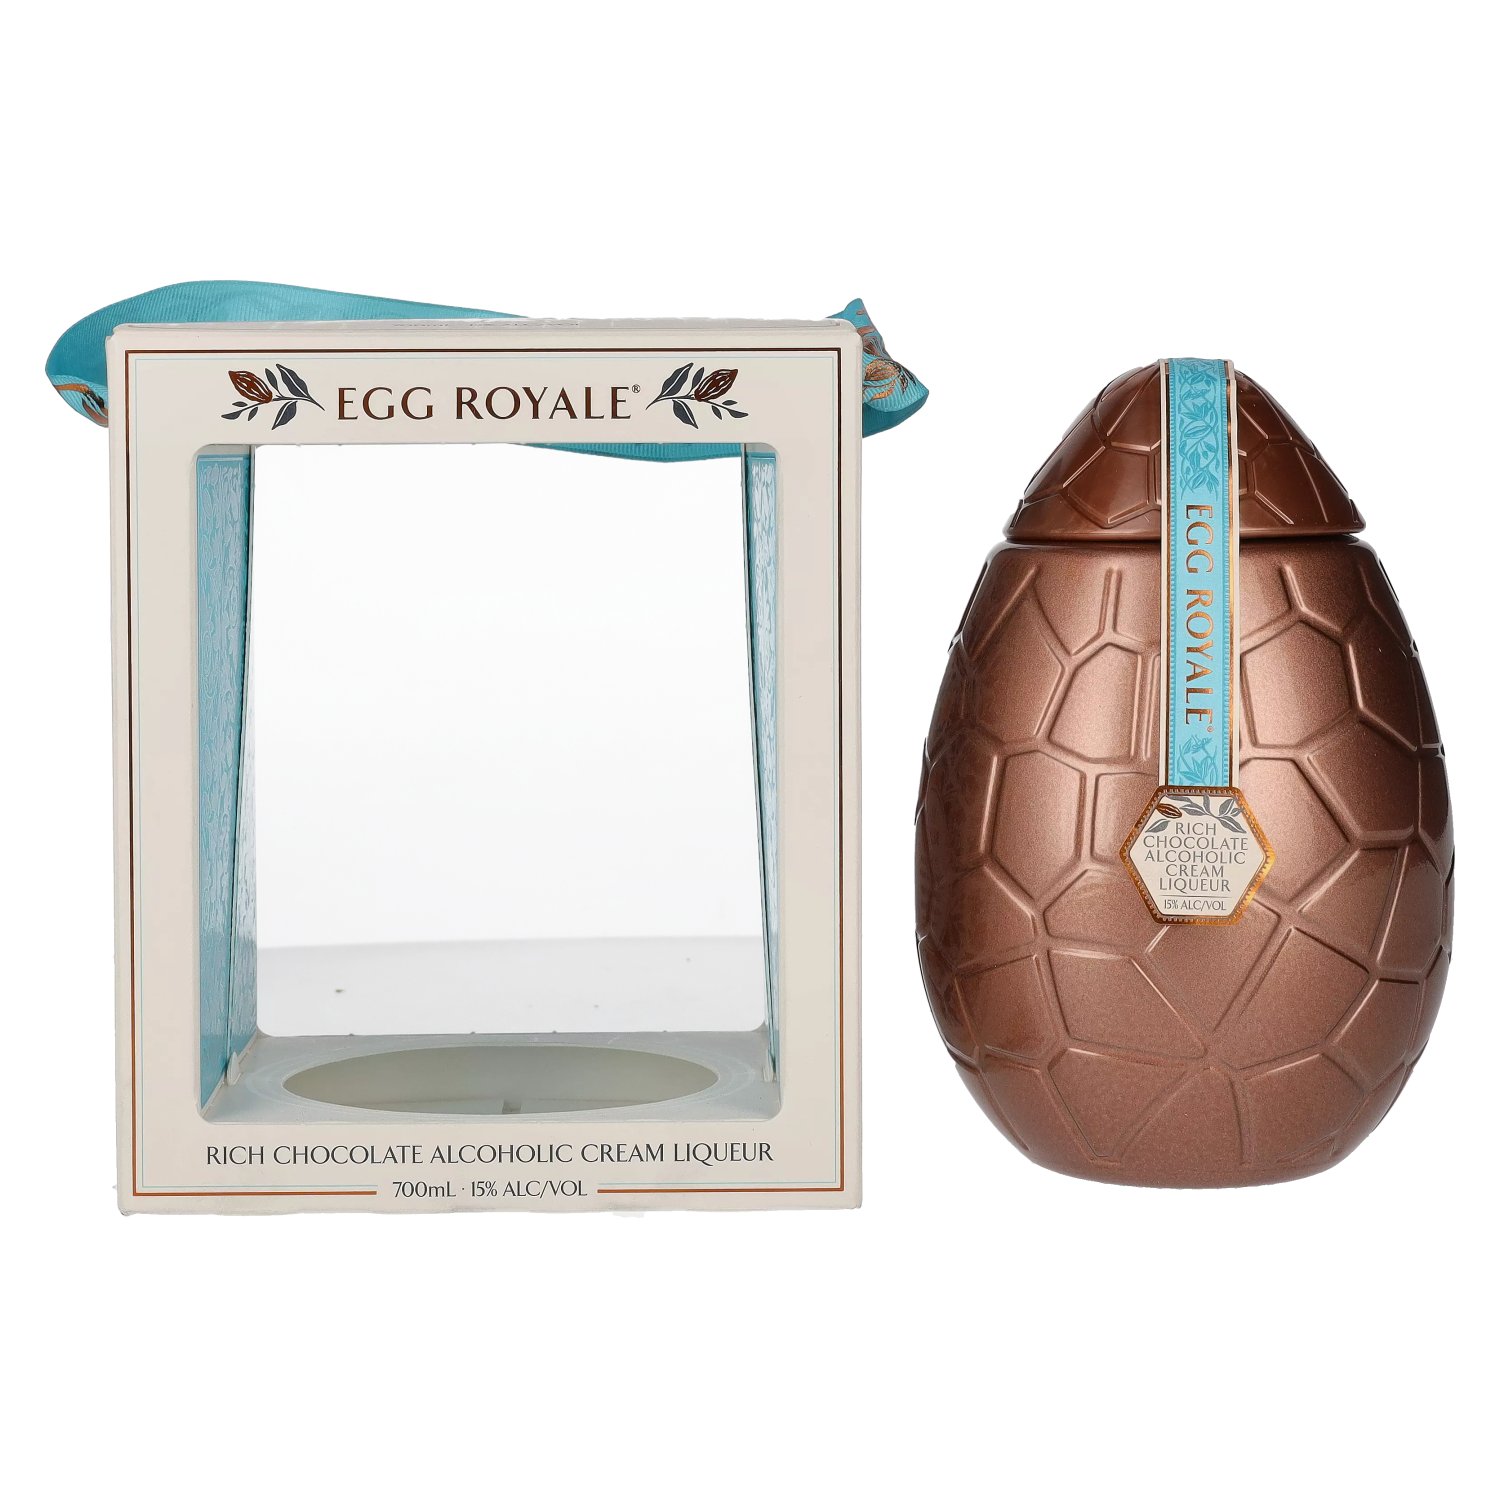 Giftbox 0,7l Vol. Cream Chocolate in Royale Egg Rich Liqueur 15%